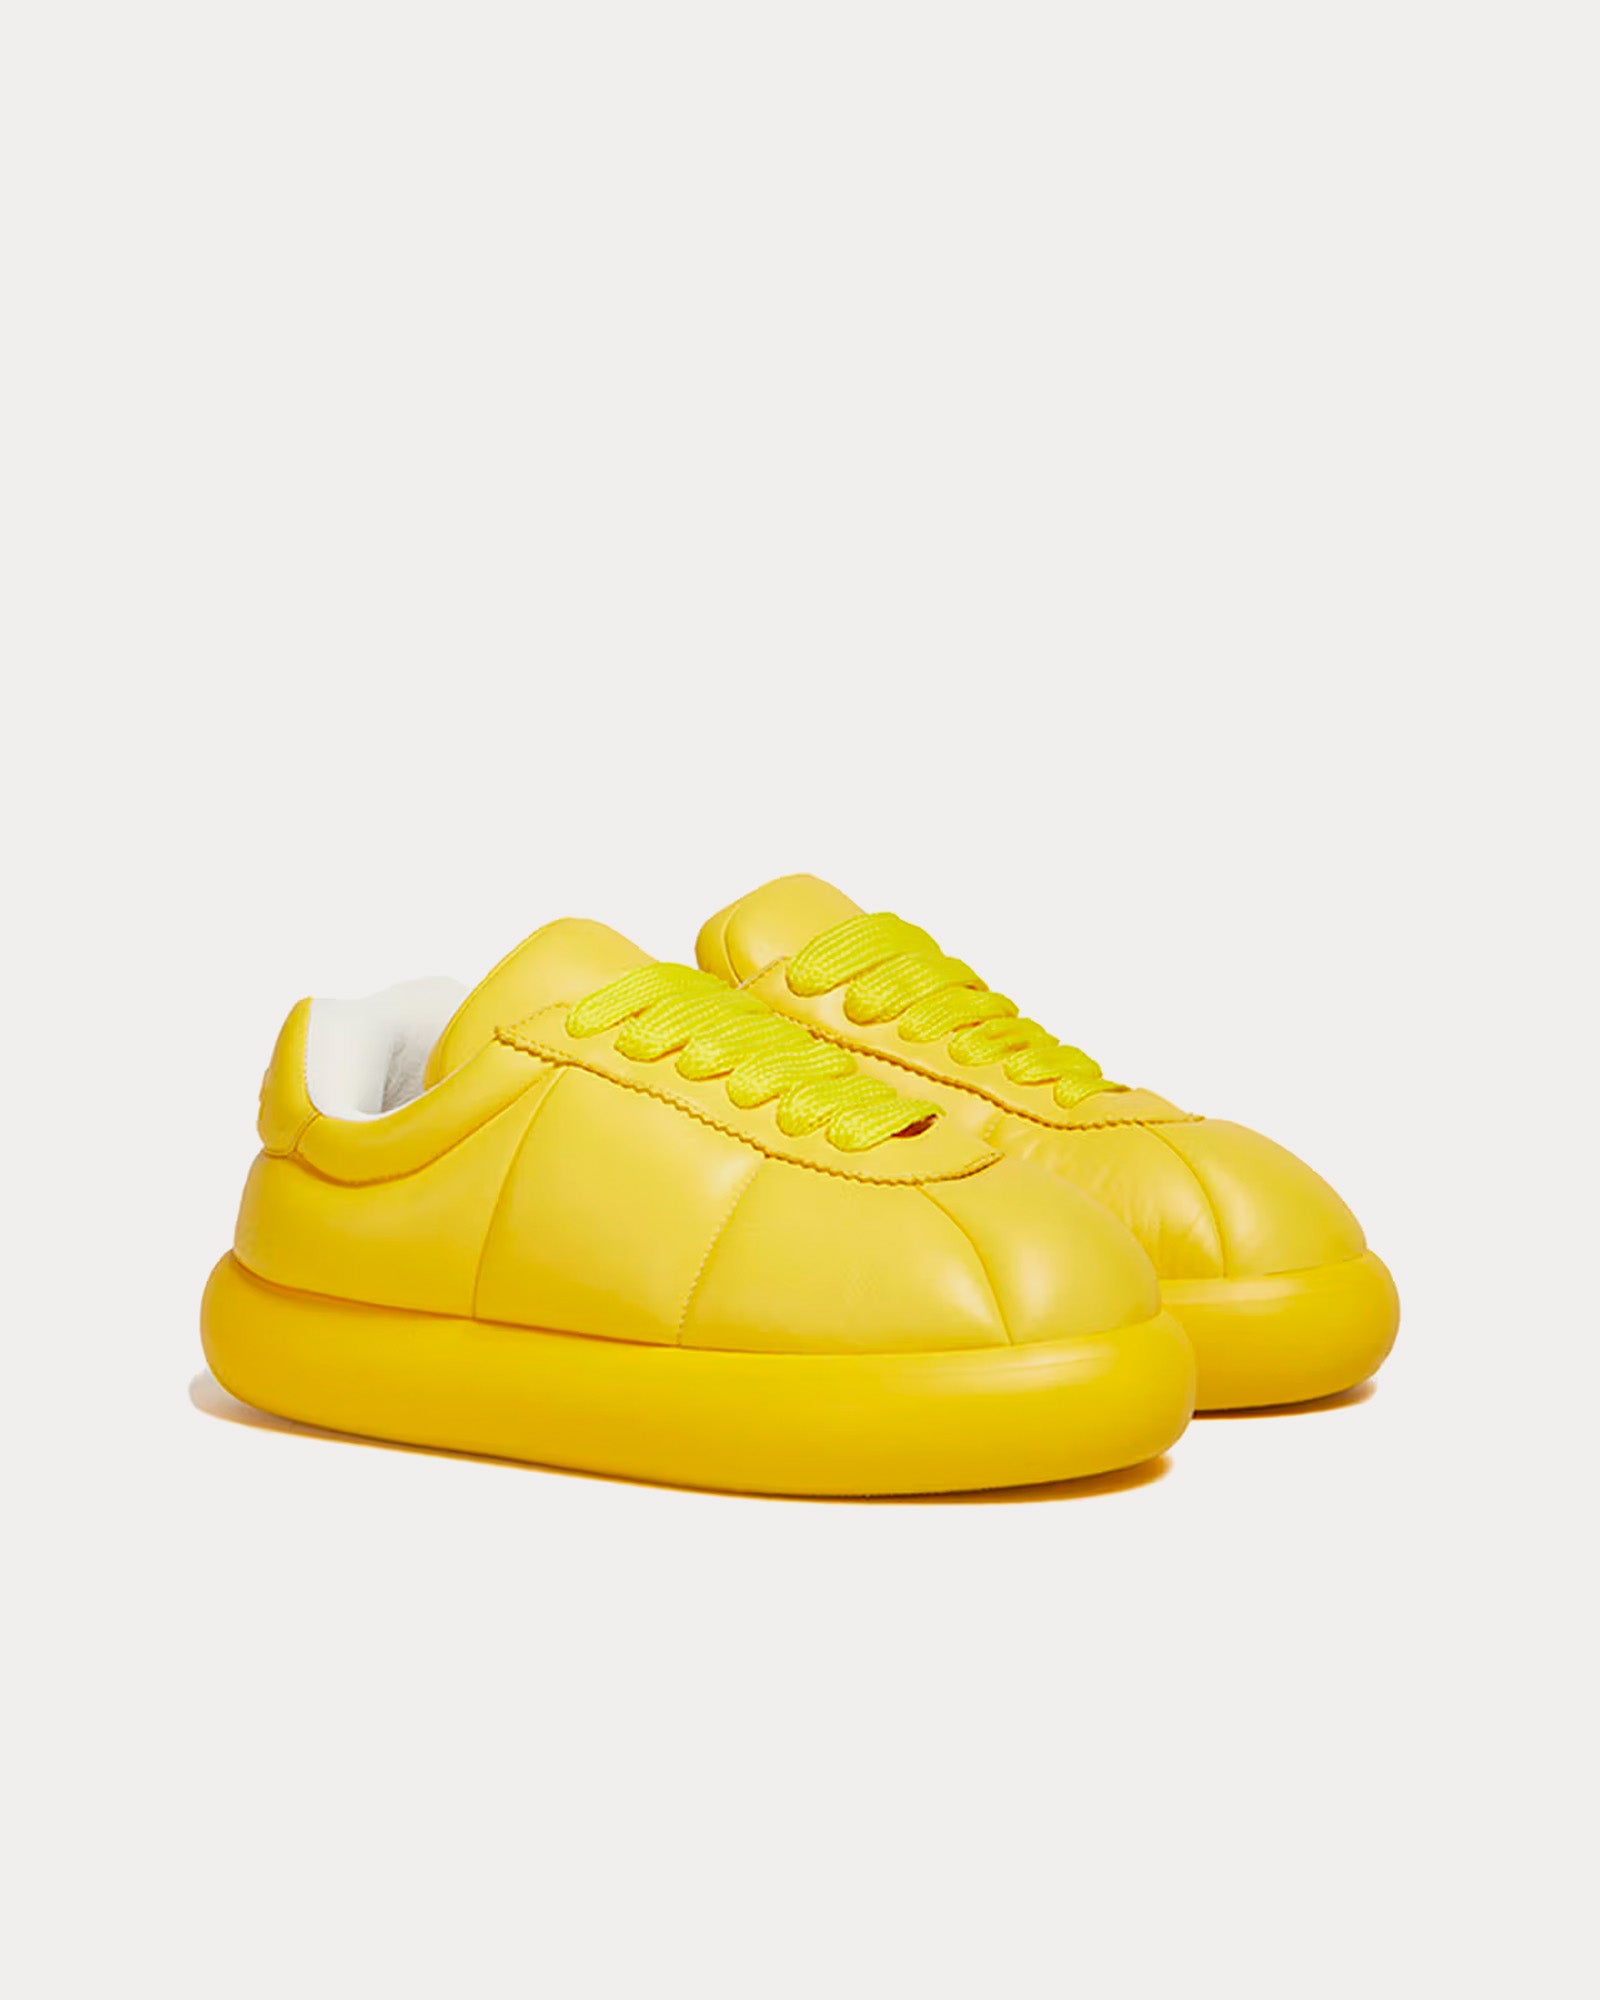 Marni - Bigfoot 2.0 Leather Yellow Low Top Sneakers